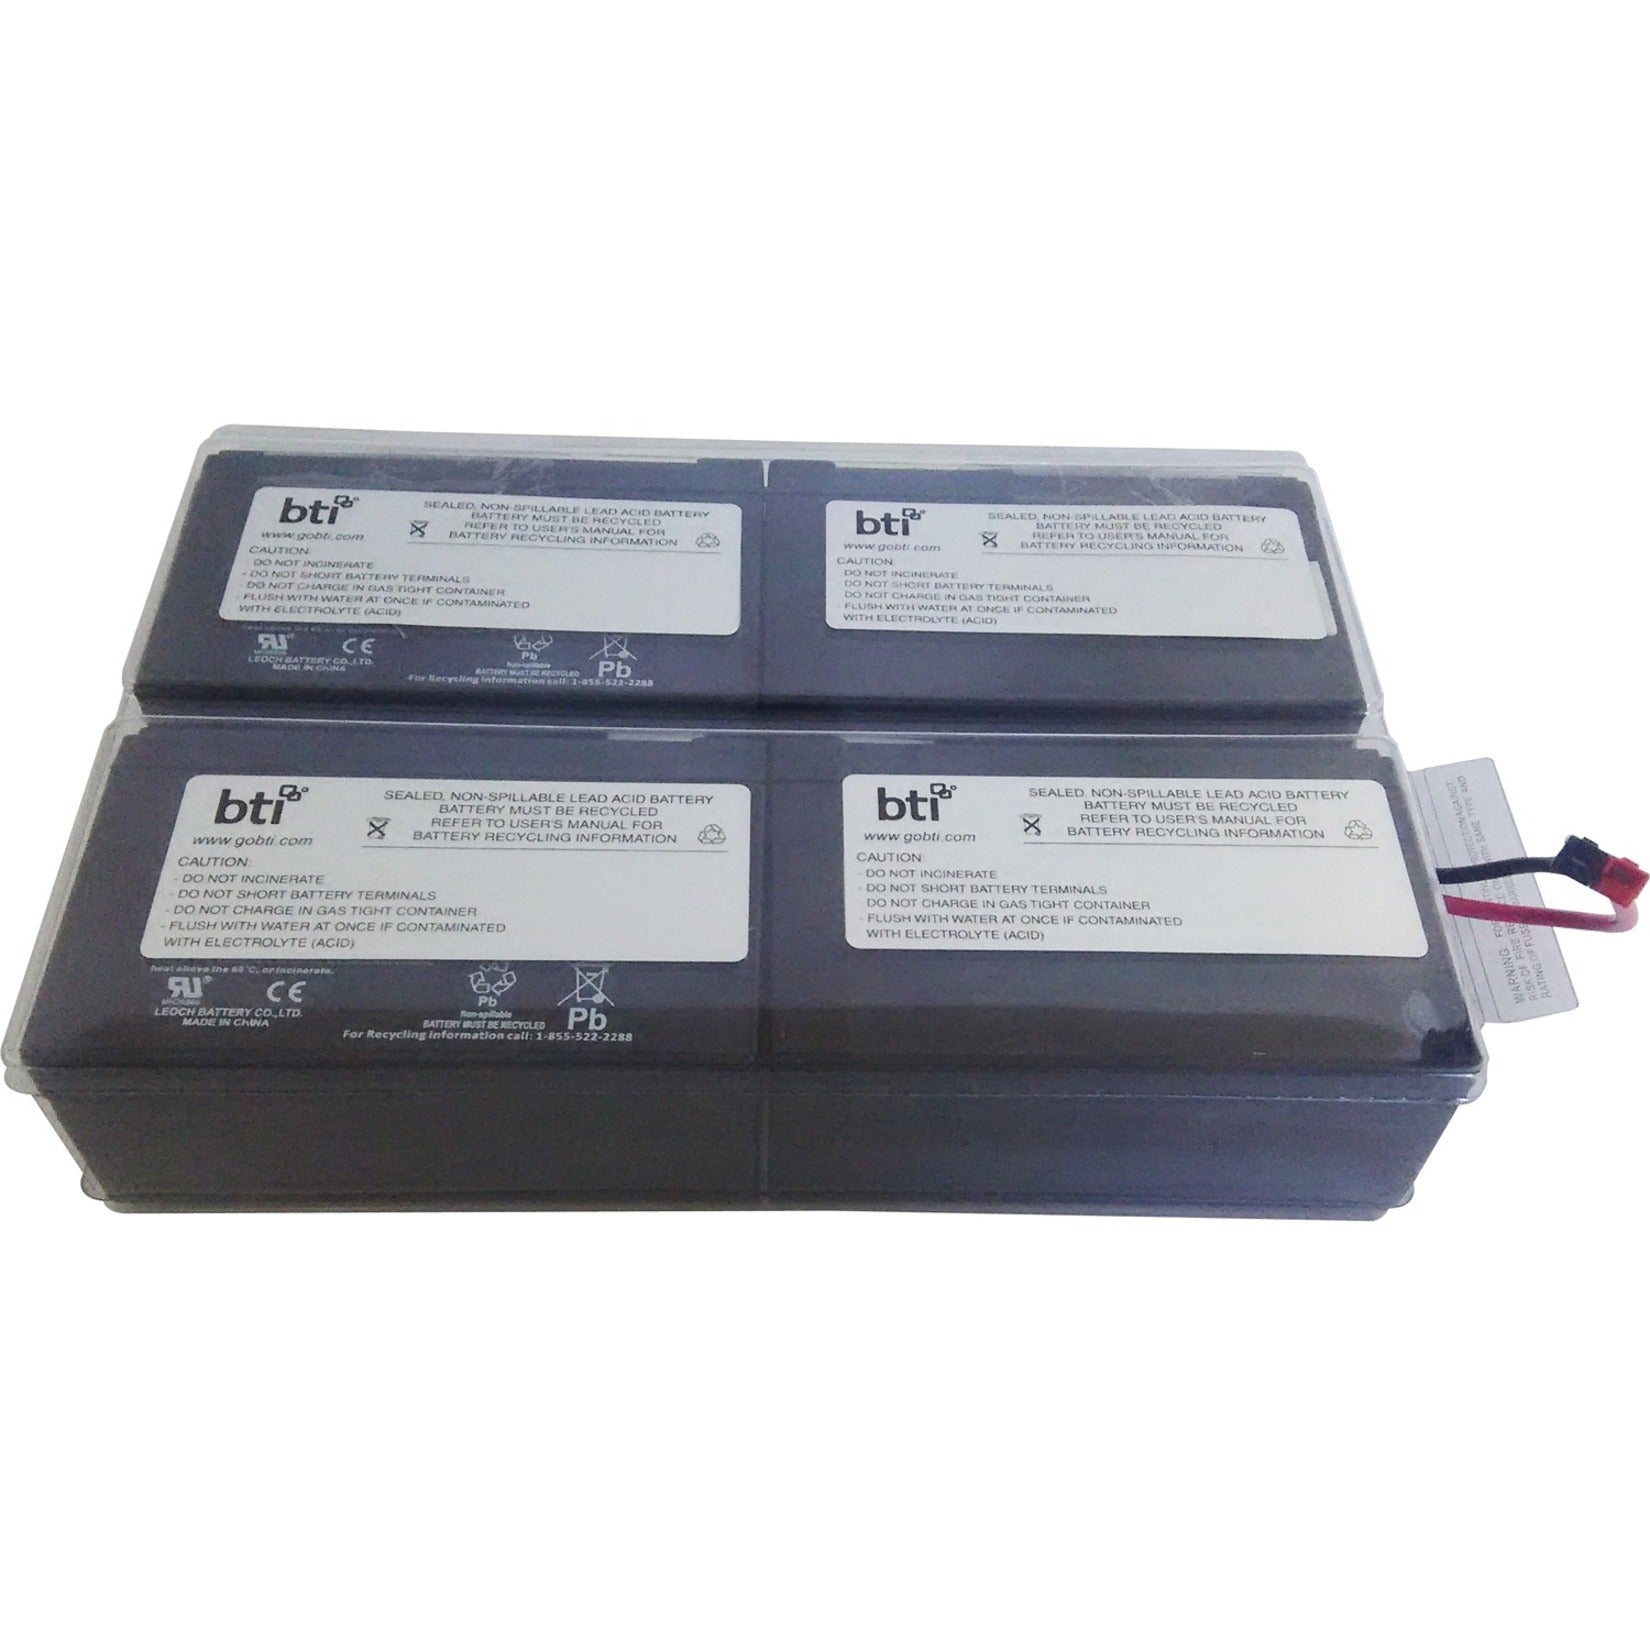 BTI RBC94-2U-BTI UPS Battery Pack - 18 Month Limited Warranty